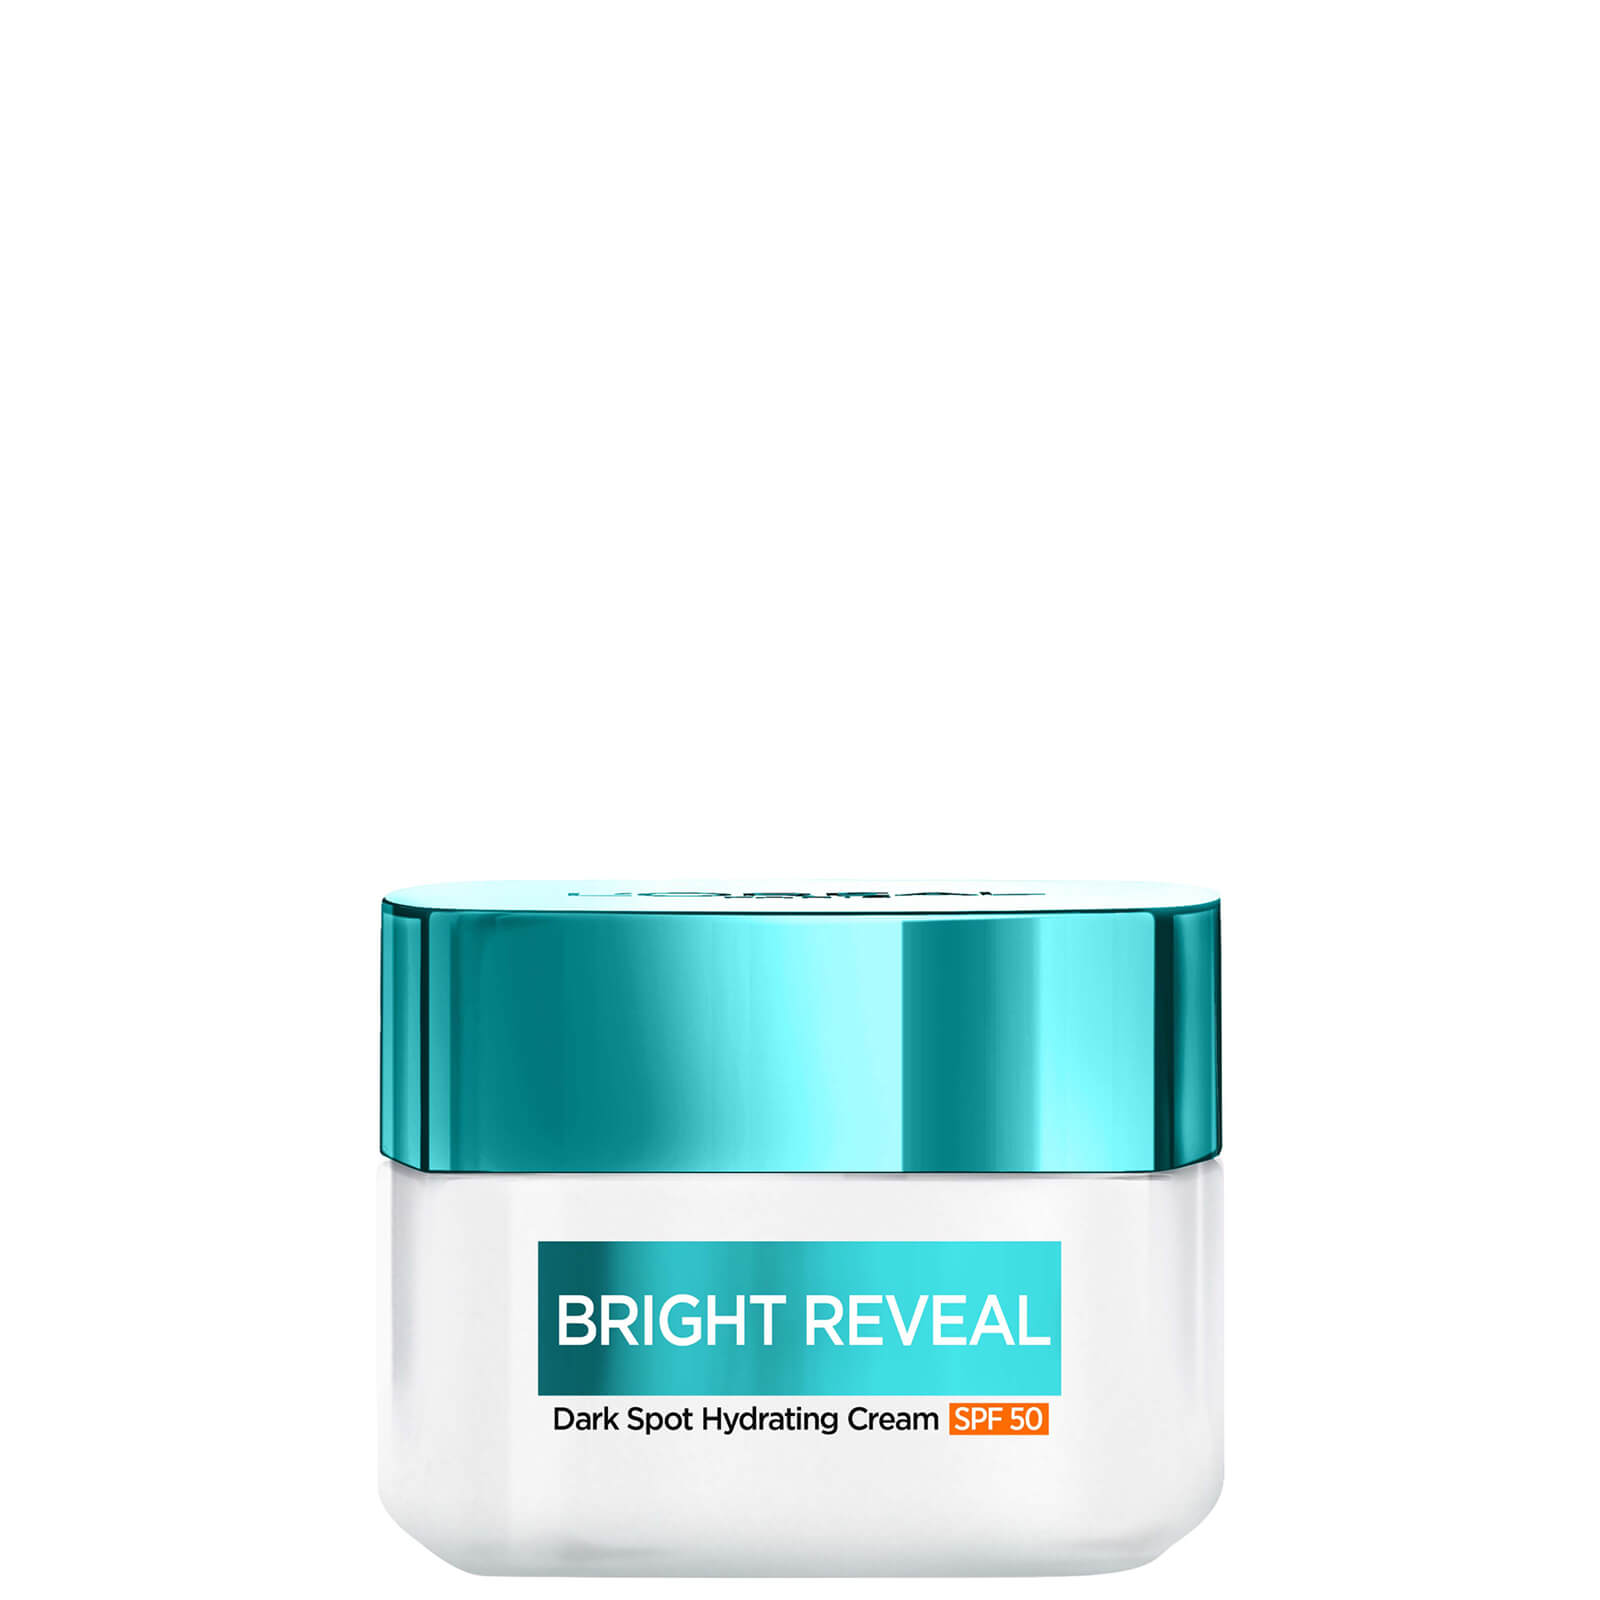 Image of L'Oréal Paris Bright Reveal Dark Spot Hydrating Cream SPF 50 with Niacinamide 50ml